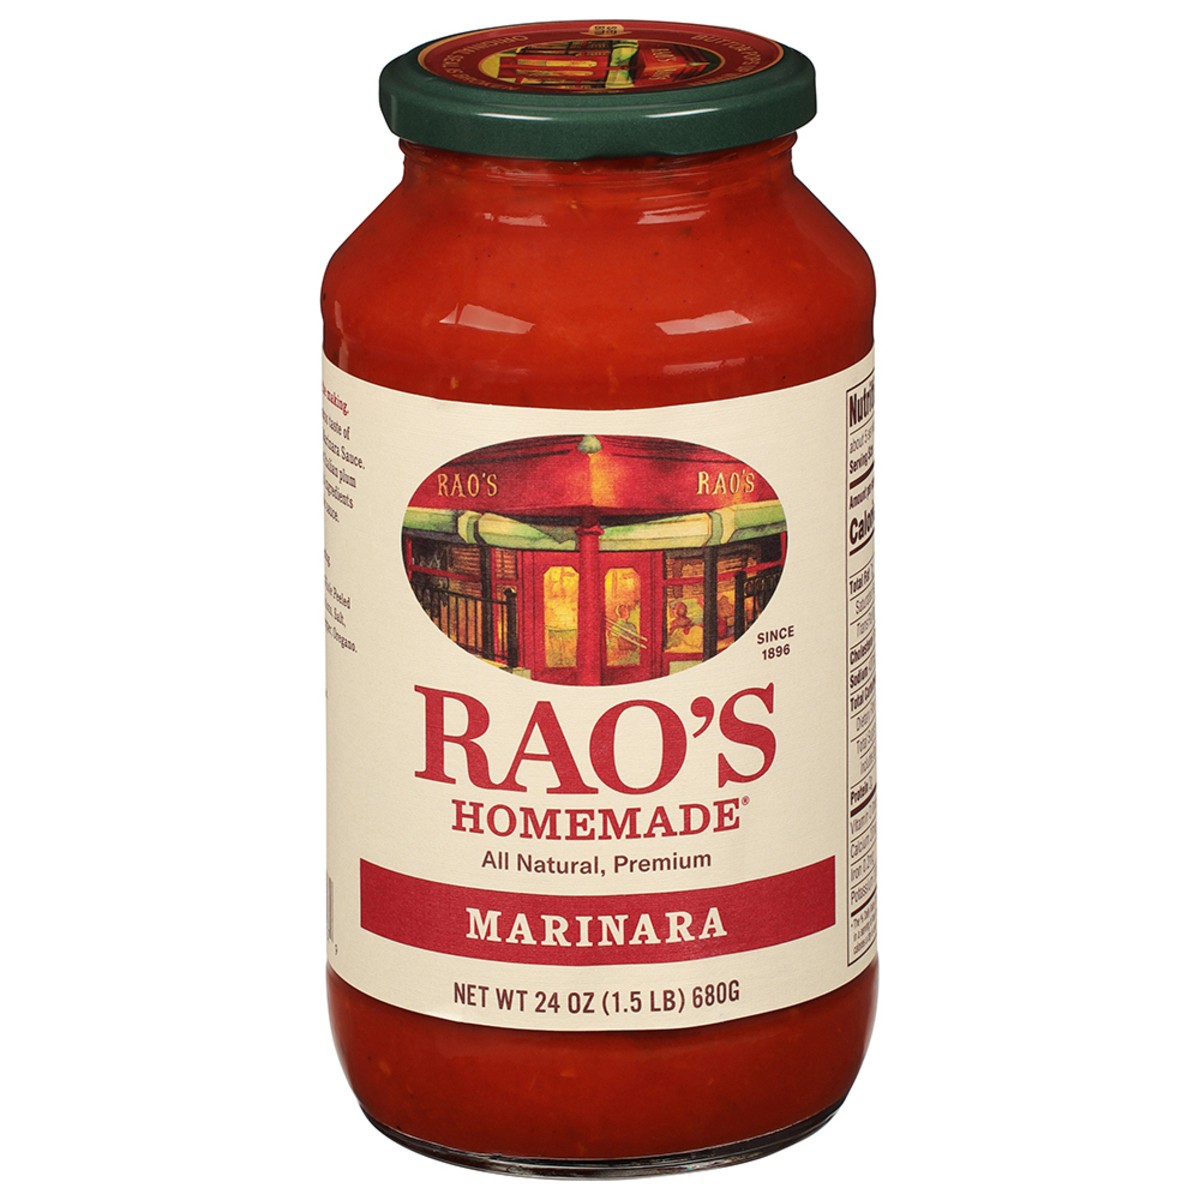 slide 1 of 85, Rao's Homemade Marinara Sauce | 24 oz | All Purpose Tomato Sauce | Pasta Sauce | Carb Conscious, Keto Friendly | All Natural, Premium Quality | With Italian Tomatoes & Olive Oil, 24 oz